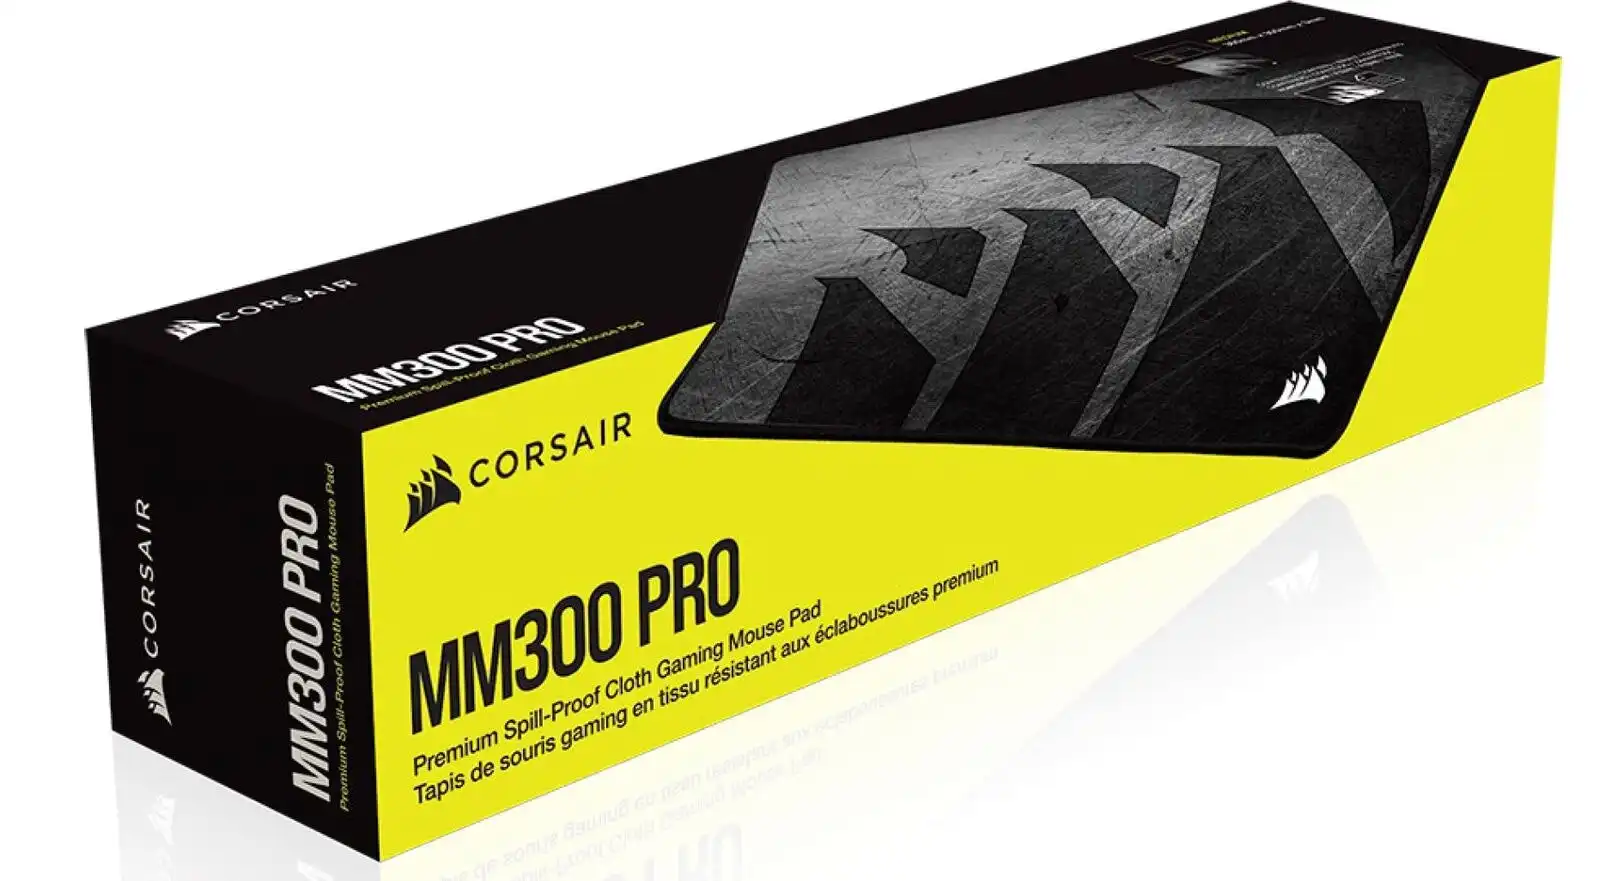 Corsair MM300 PRO Premium Medium Cloth Gaming Mat Mouse Pad for Keyboard/Mice